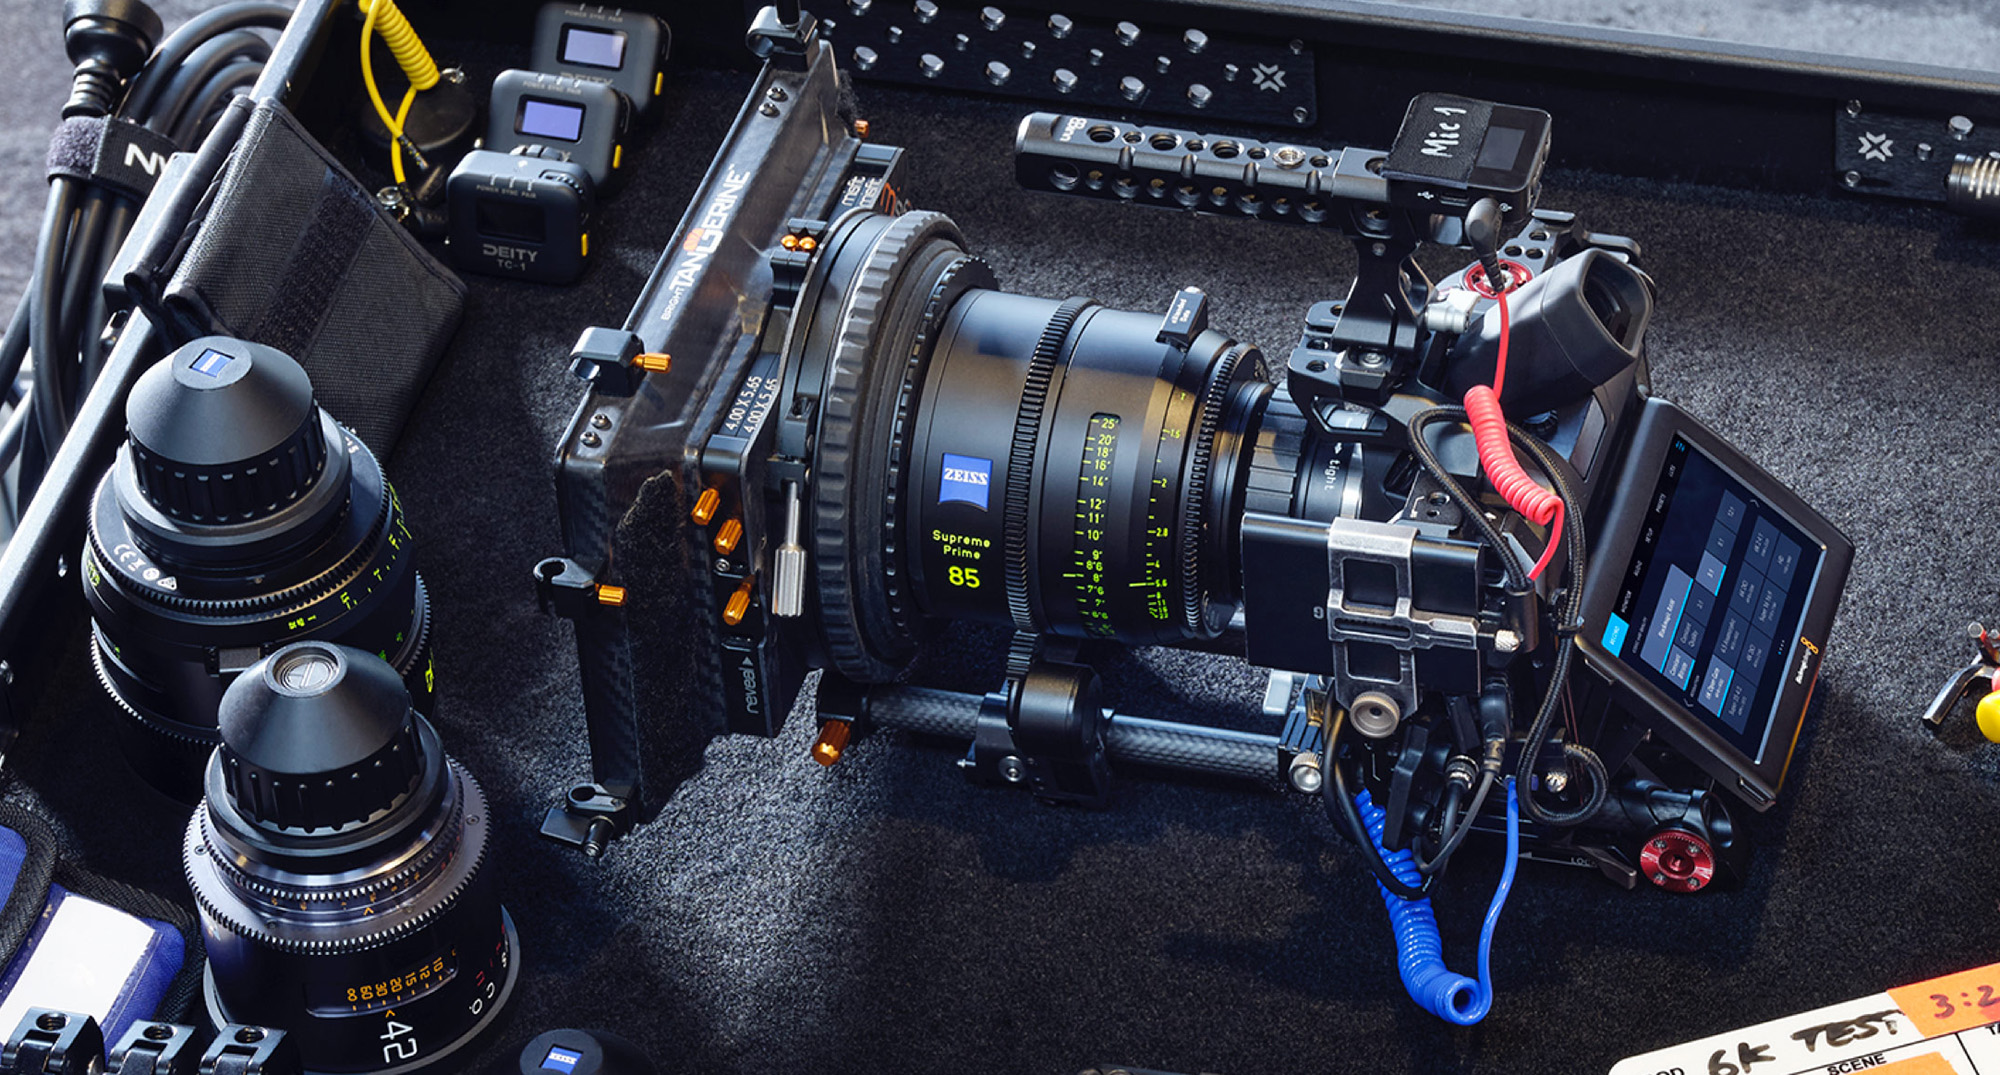 Review: Blackmagic Cinema Camera 6K - Blackmagic Design Expands Its Cinema Camera Lineup 27